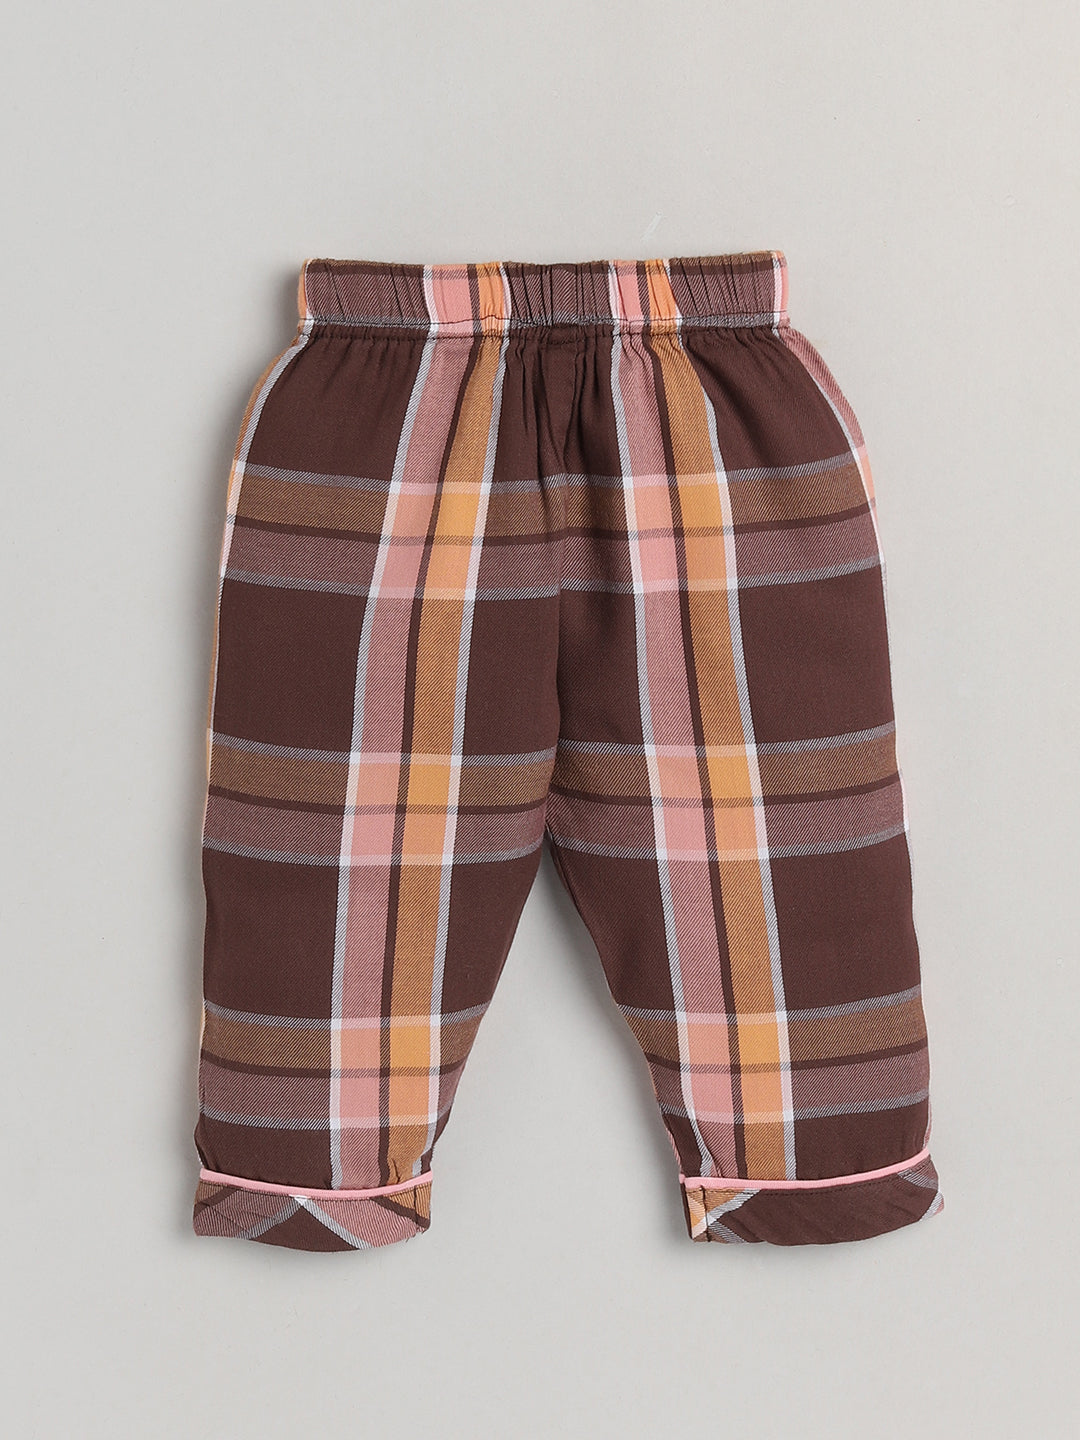 Brown Checks Full Sleeve Nightwear Set